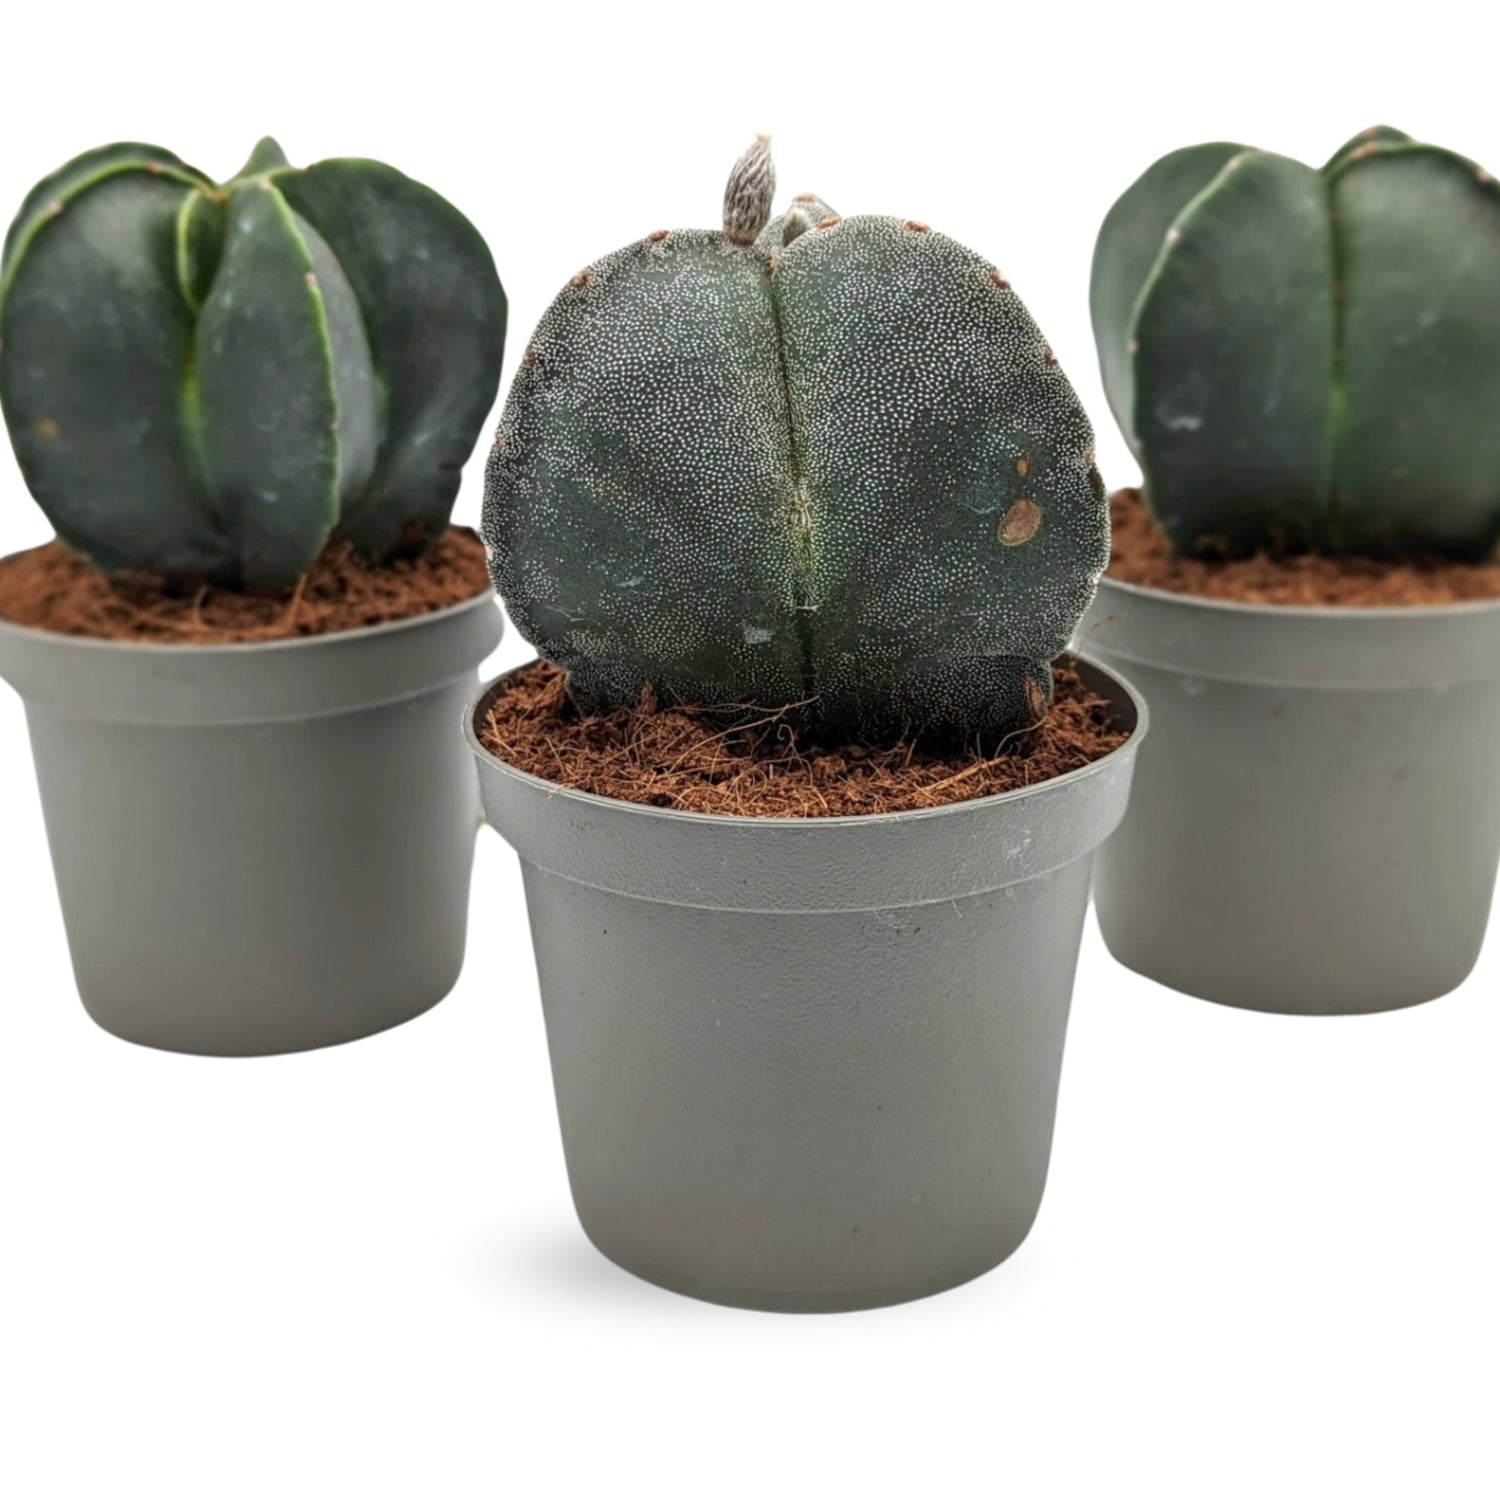 Astrophytum myriostigma: The Ultimate Fossil Cactus